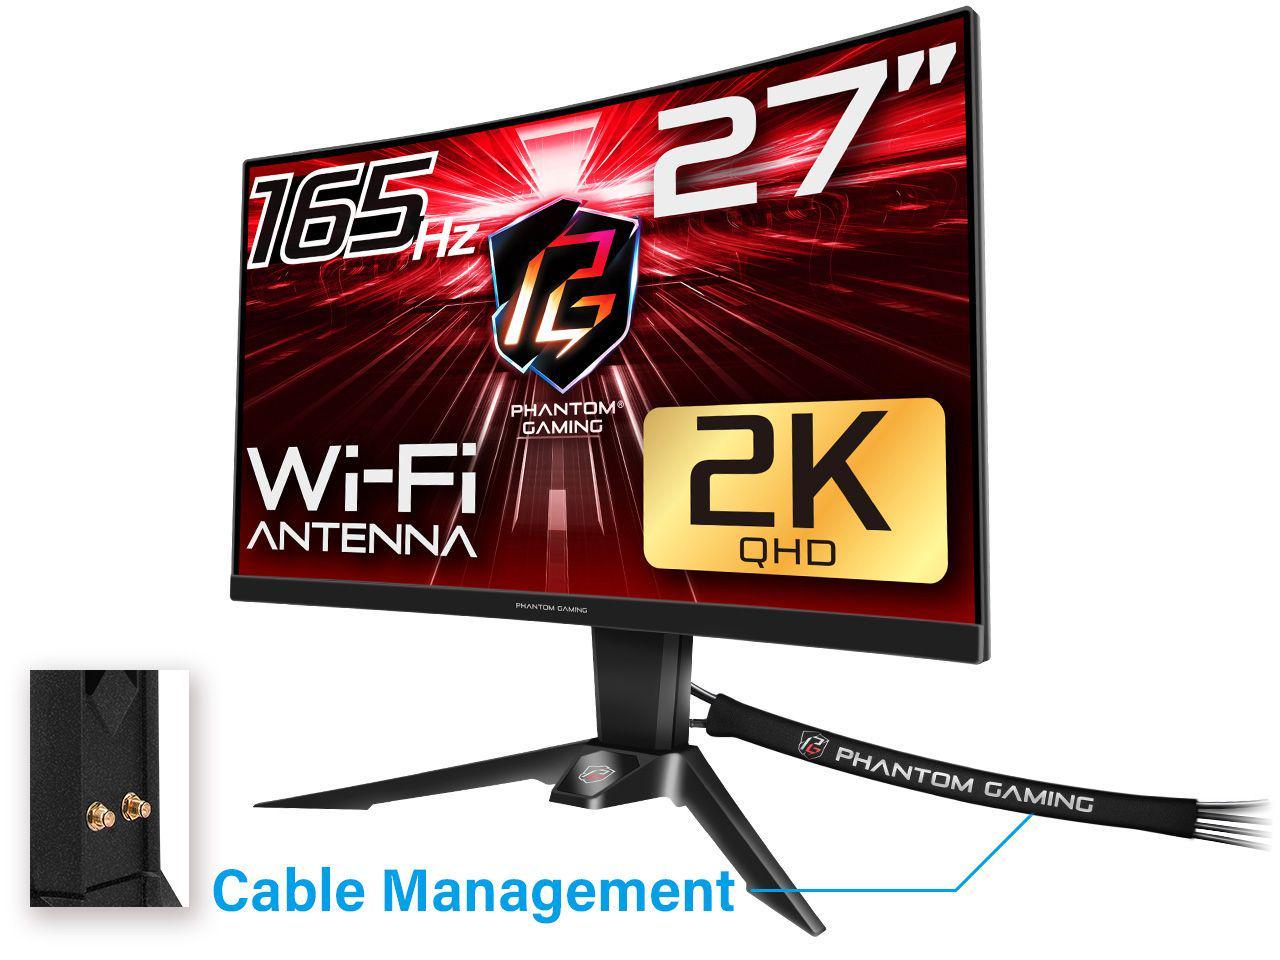 ASRock Phantom PG27Q15R2A 27,2K, Wi-Fi Antenna FreeSync Premium, Built-in Speakers Curved Gaming Monitor $170